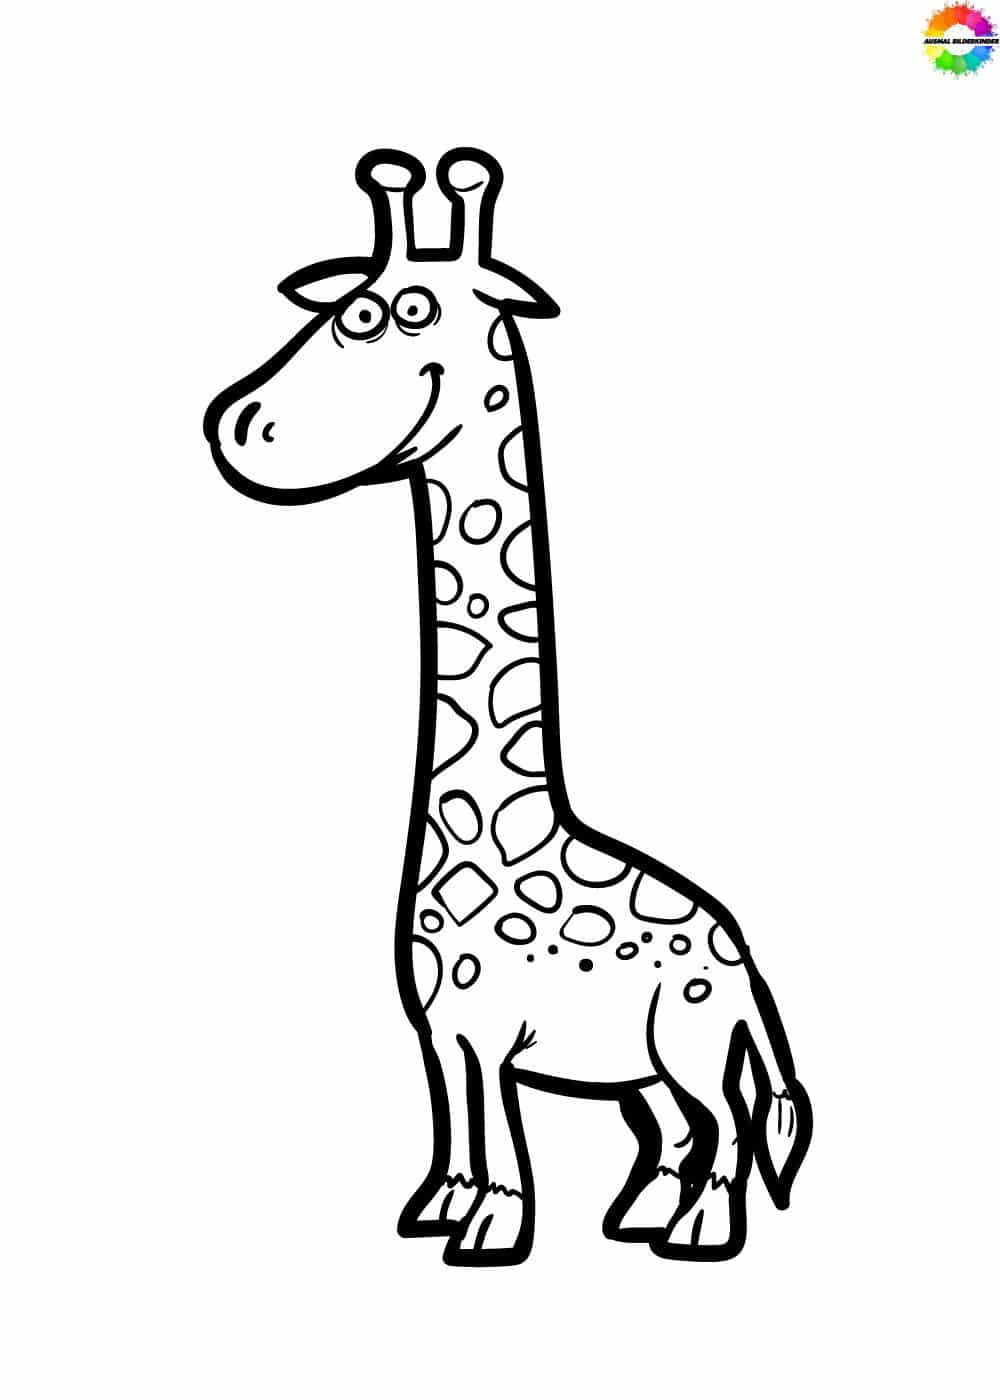 Giraffe 16